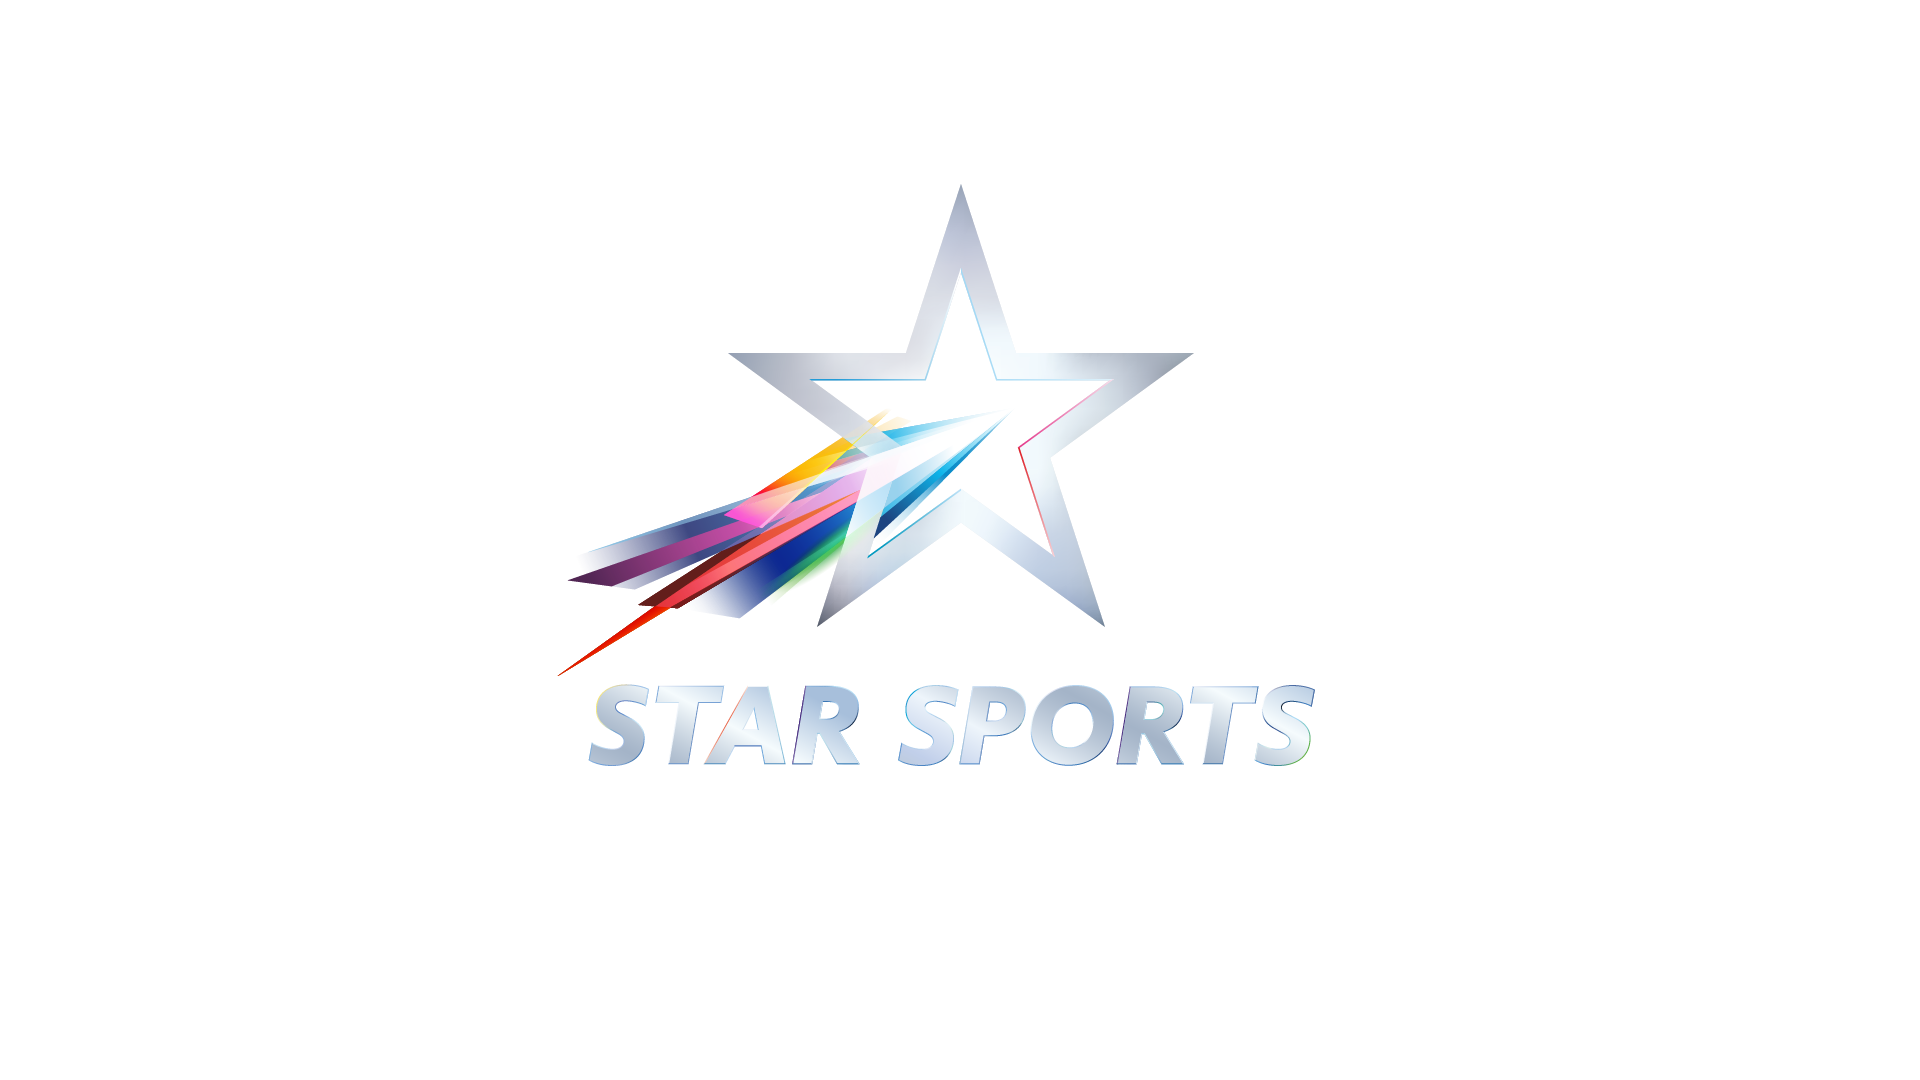 Star people sport logo Royalty Free Vector Image